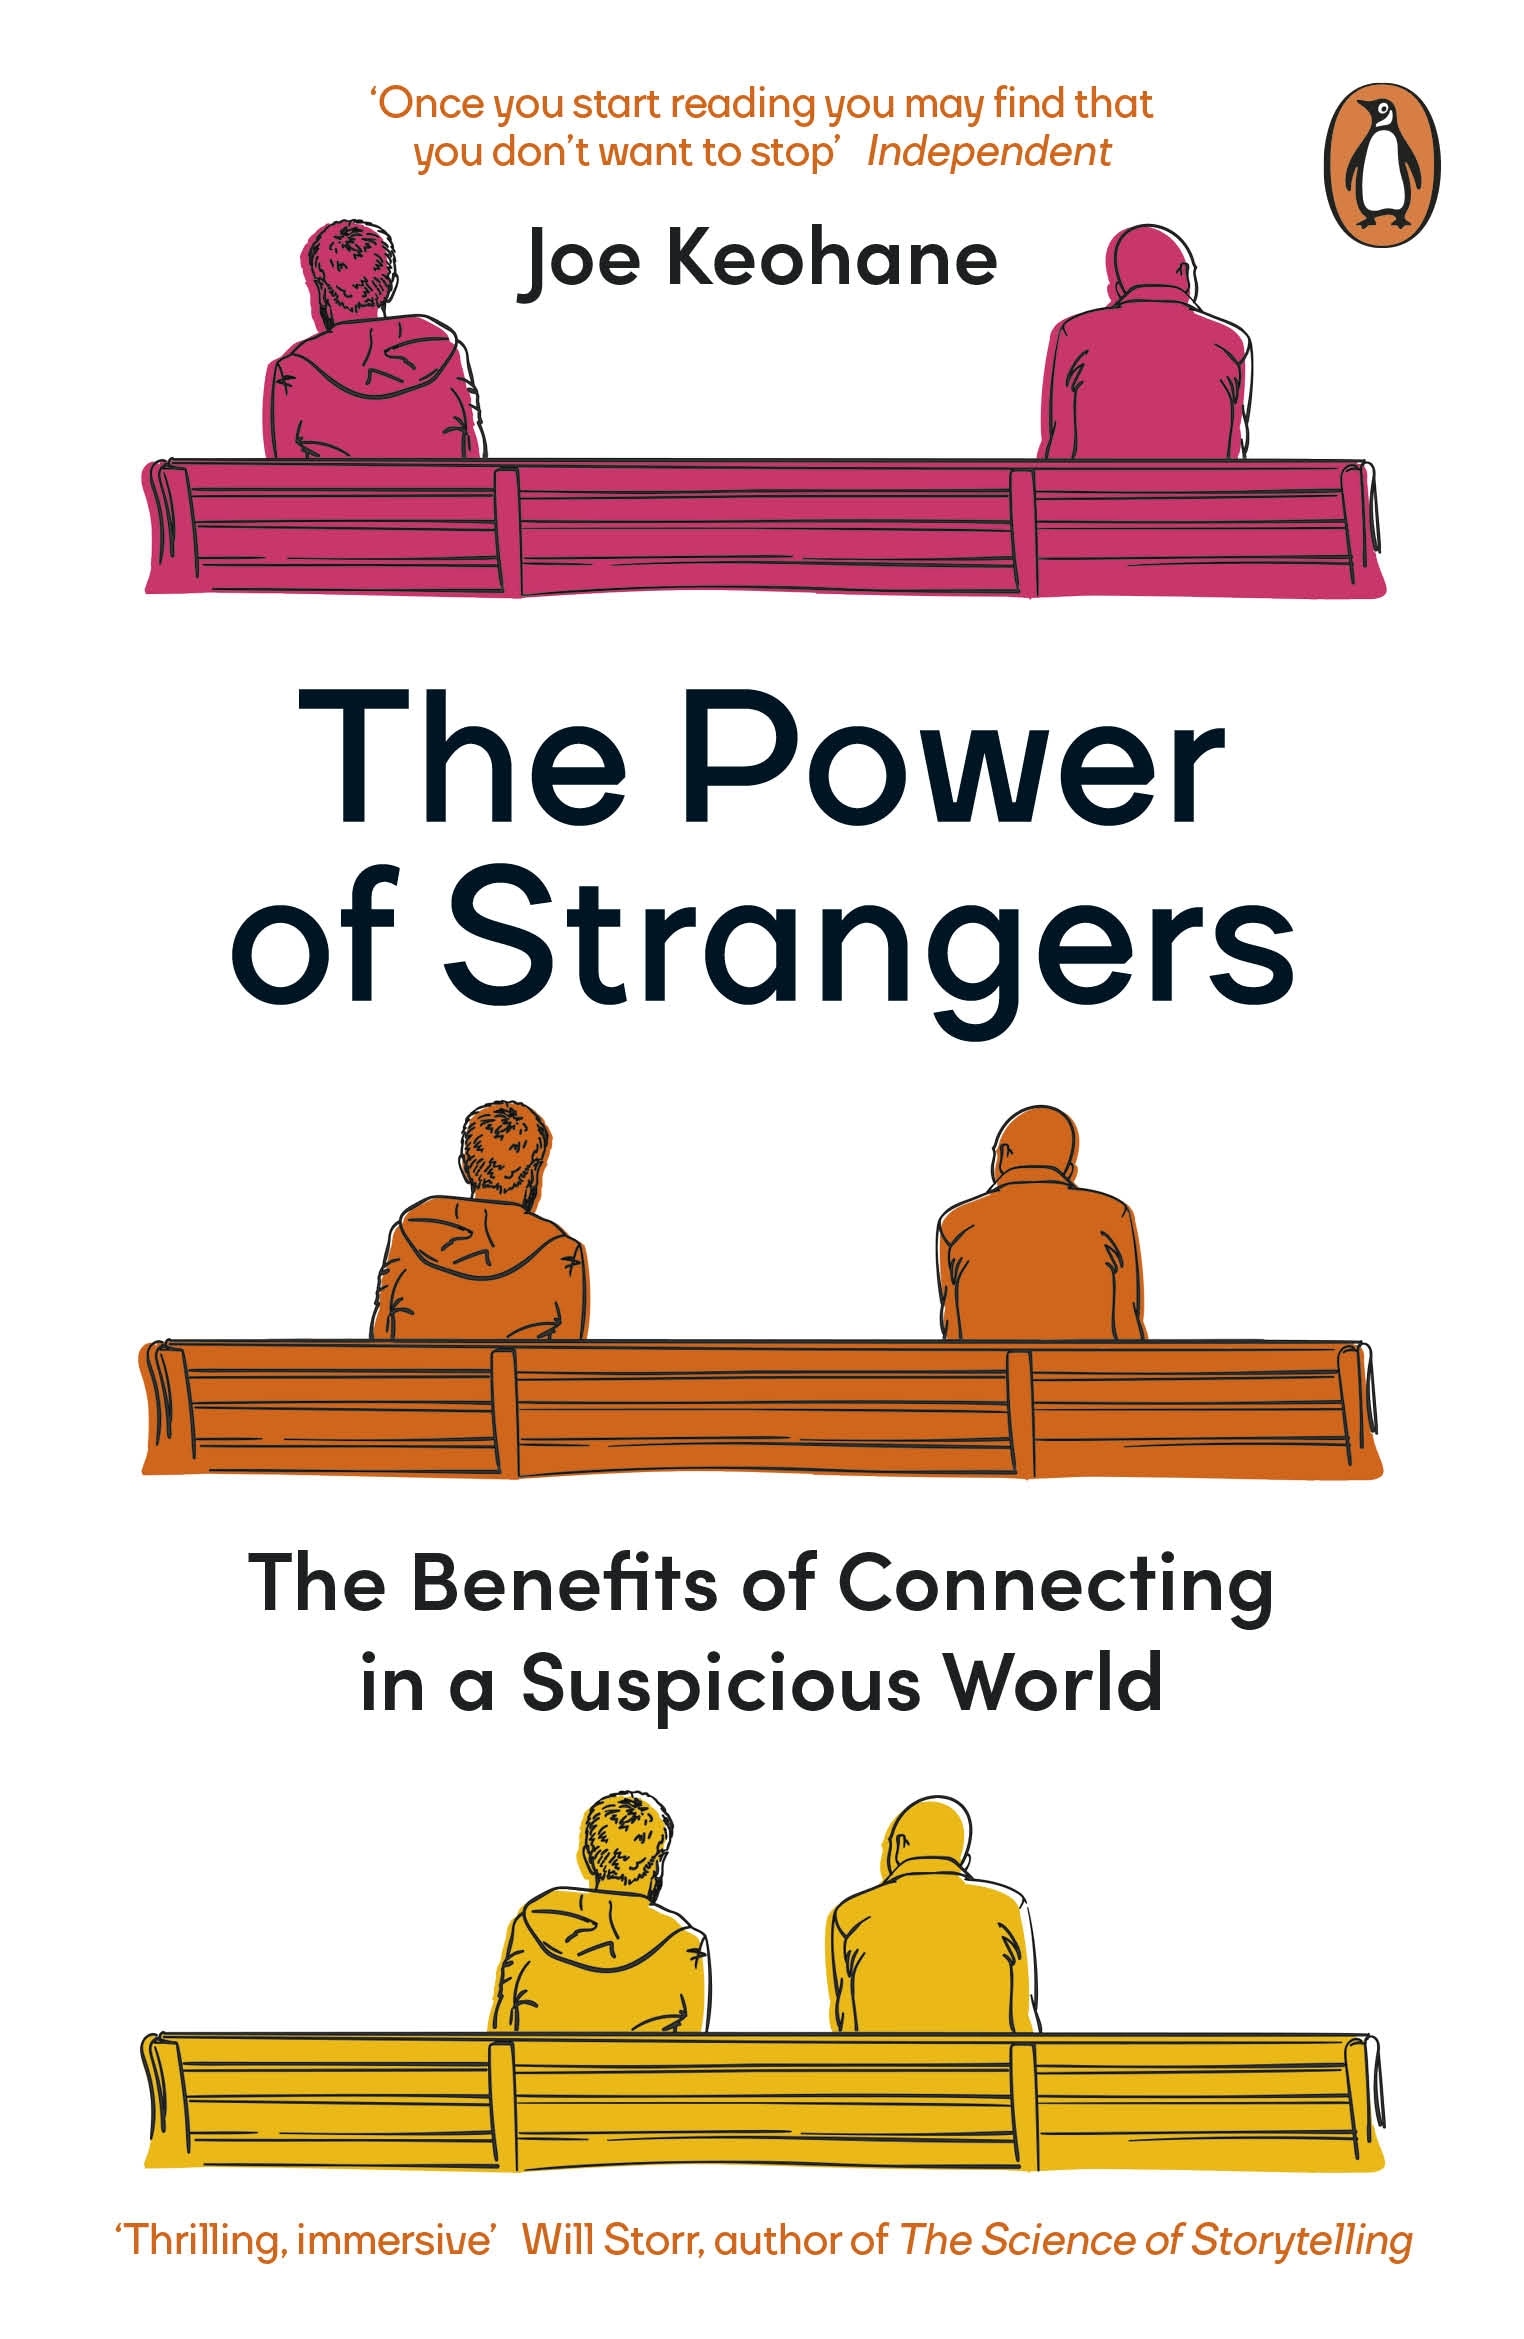 Book “The Power of Strangers” by Joe Keohane — January 13, 2022